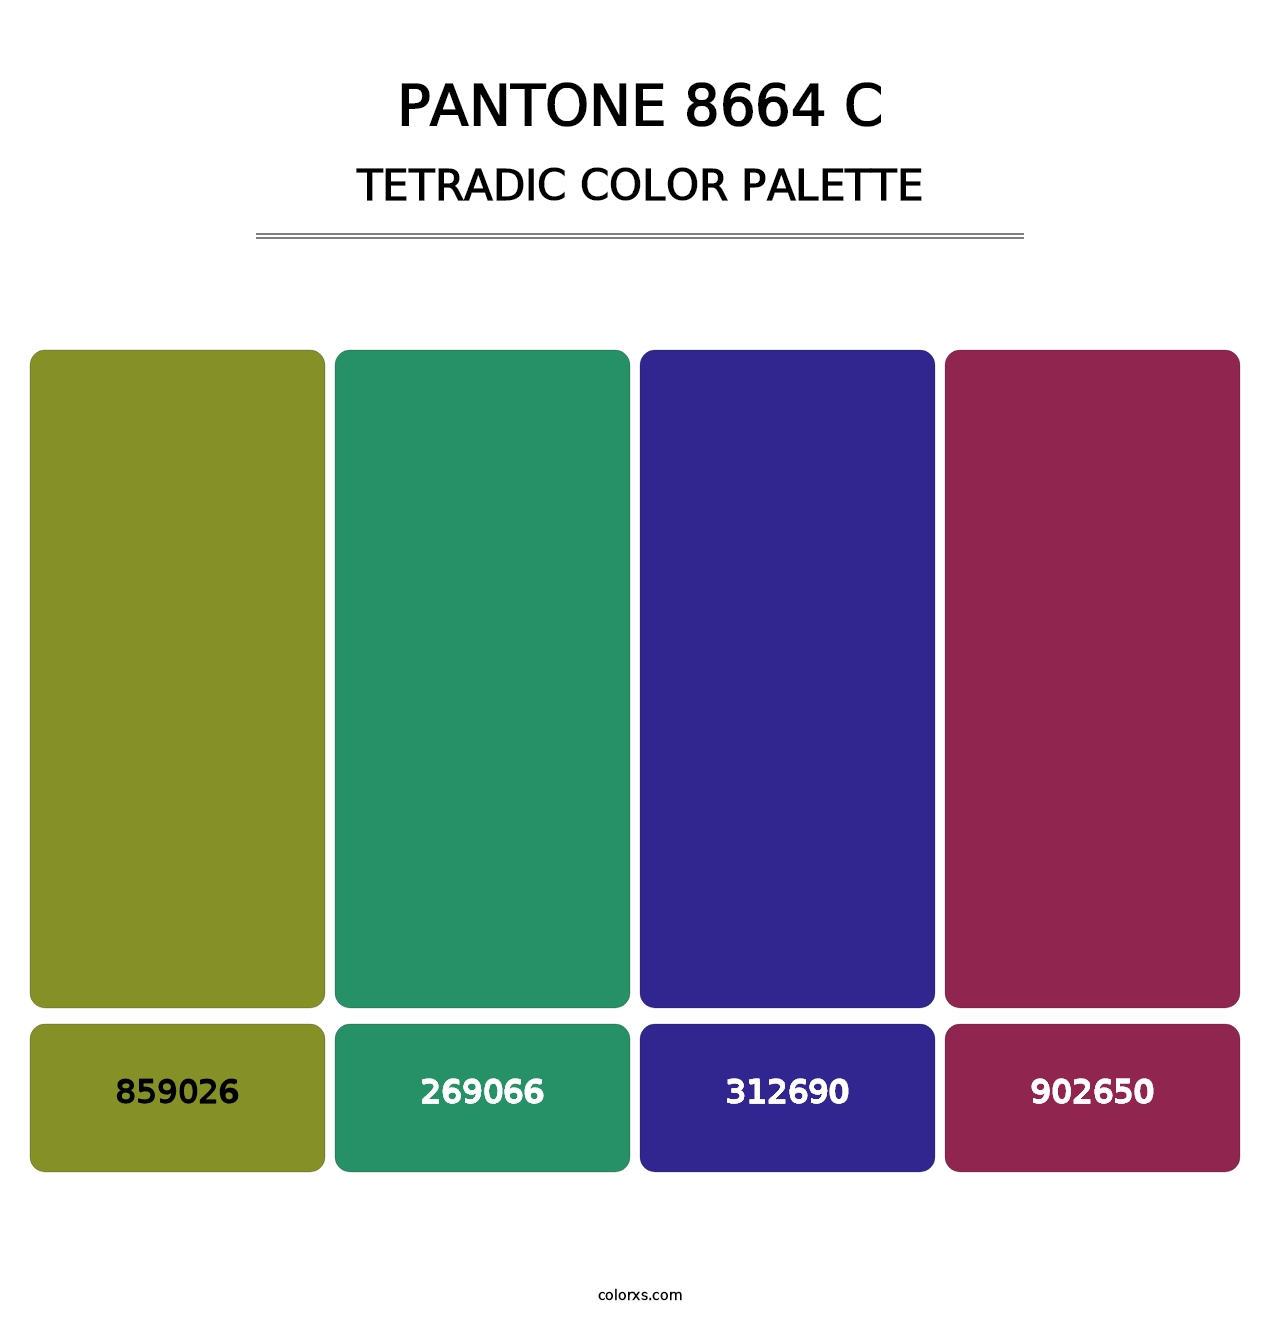 PANTONE 8664 C - Tetradic Color Palette